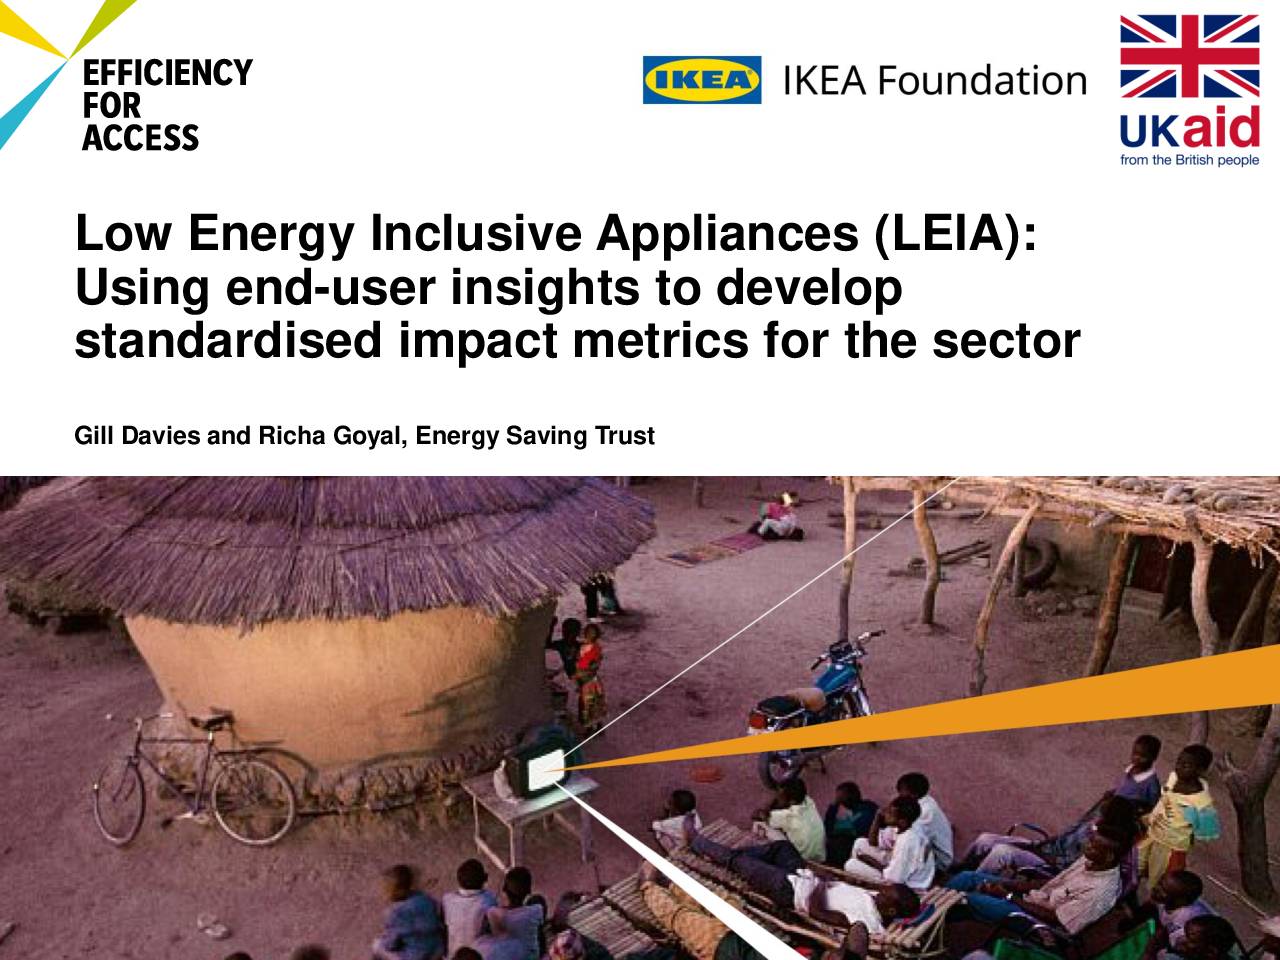 Low Energy Inclusive Appliances (LEIA) programme